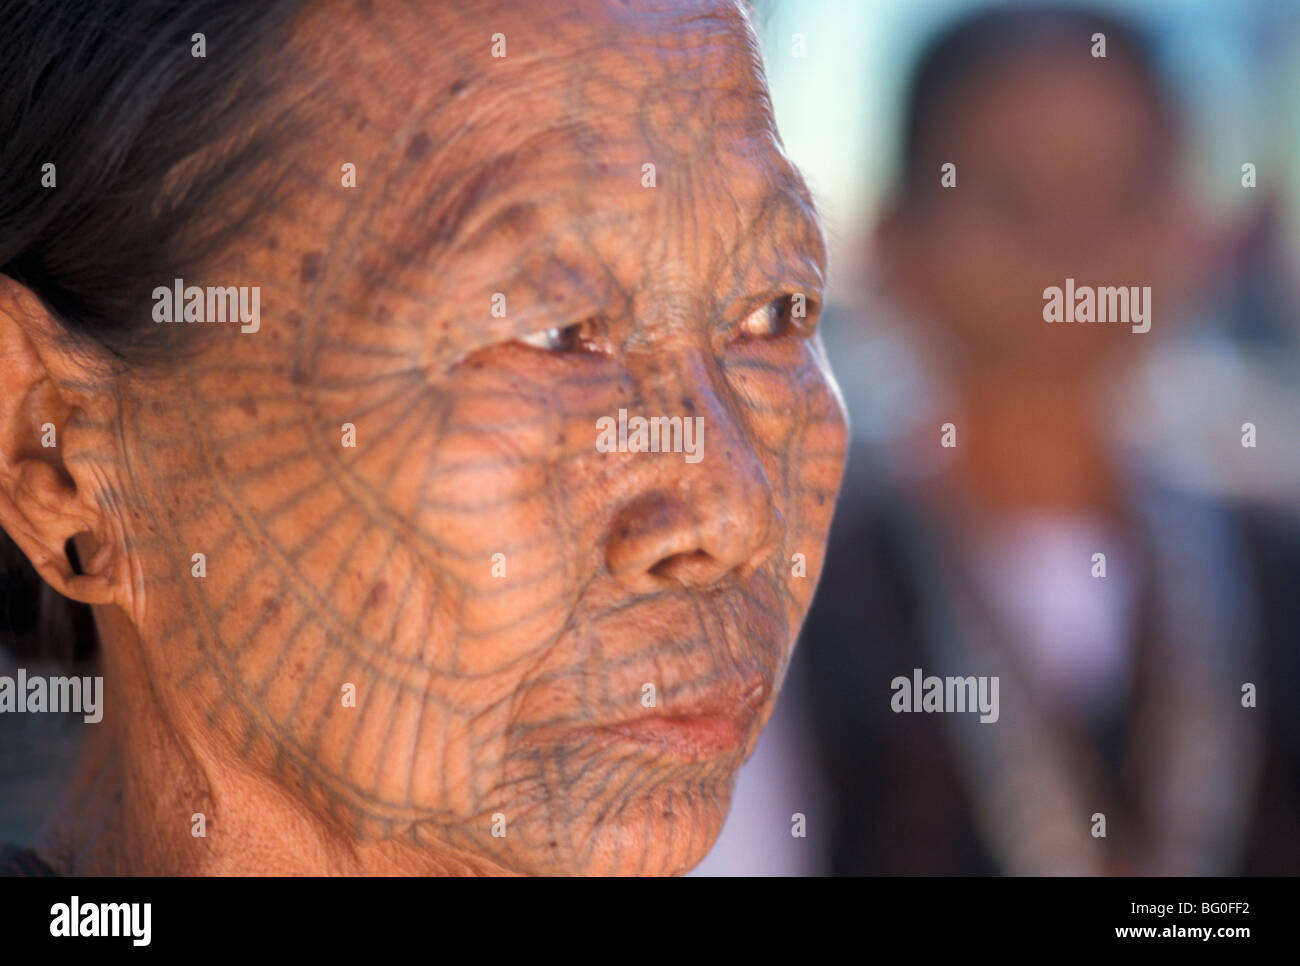 Chin woman with spiderweb tattoo, Chin state, Myanmar (Burma), Asia Stock Photo